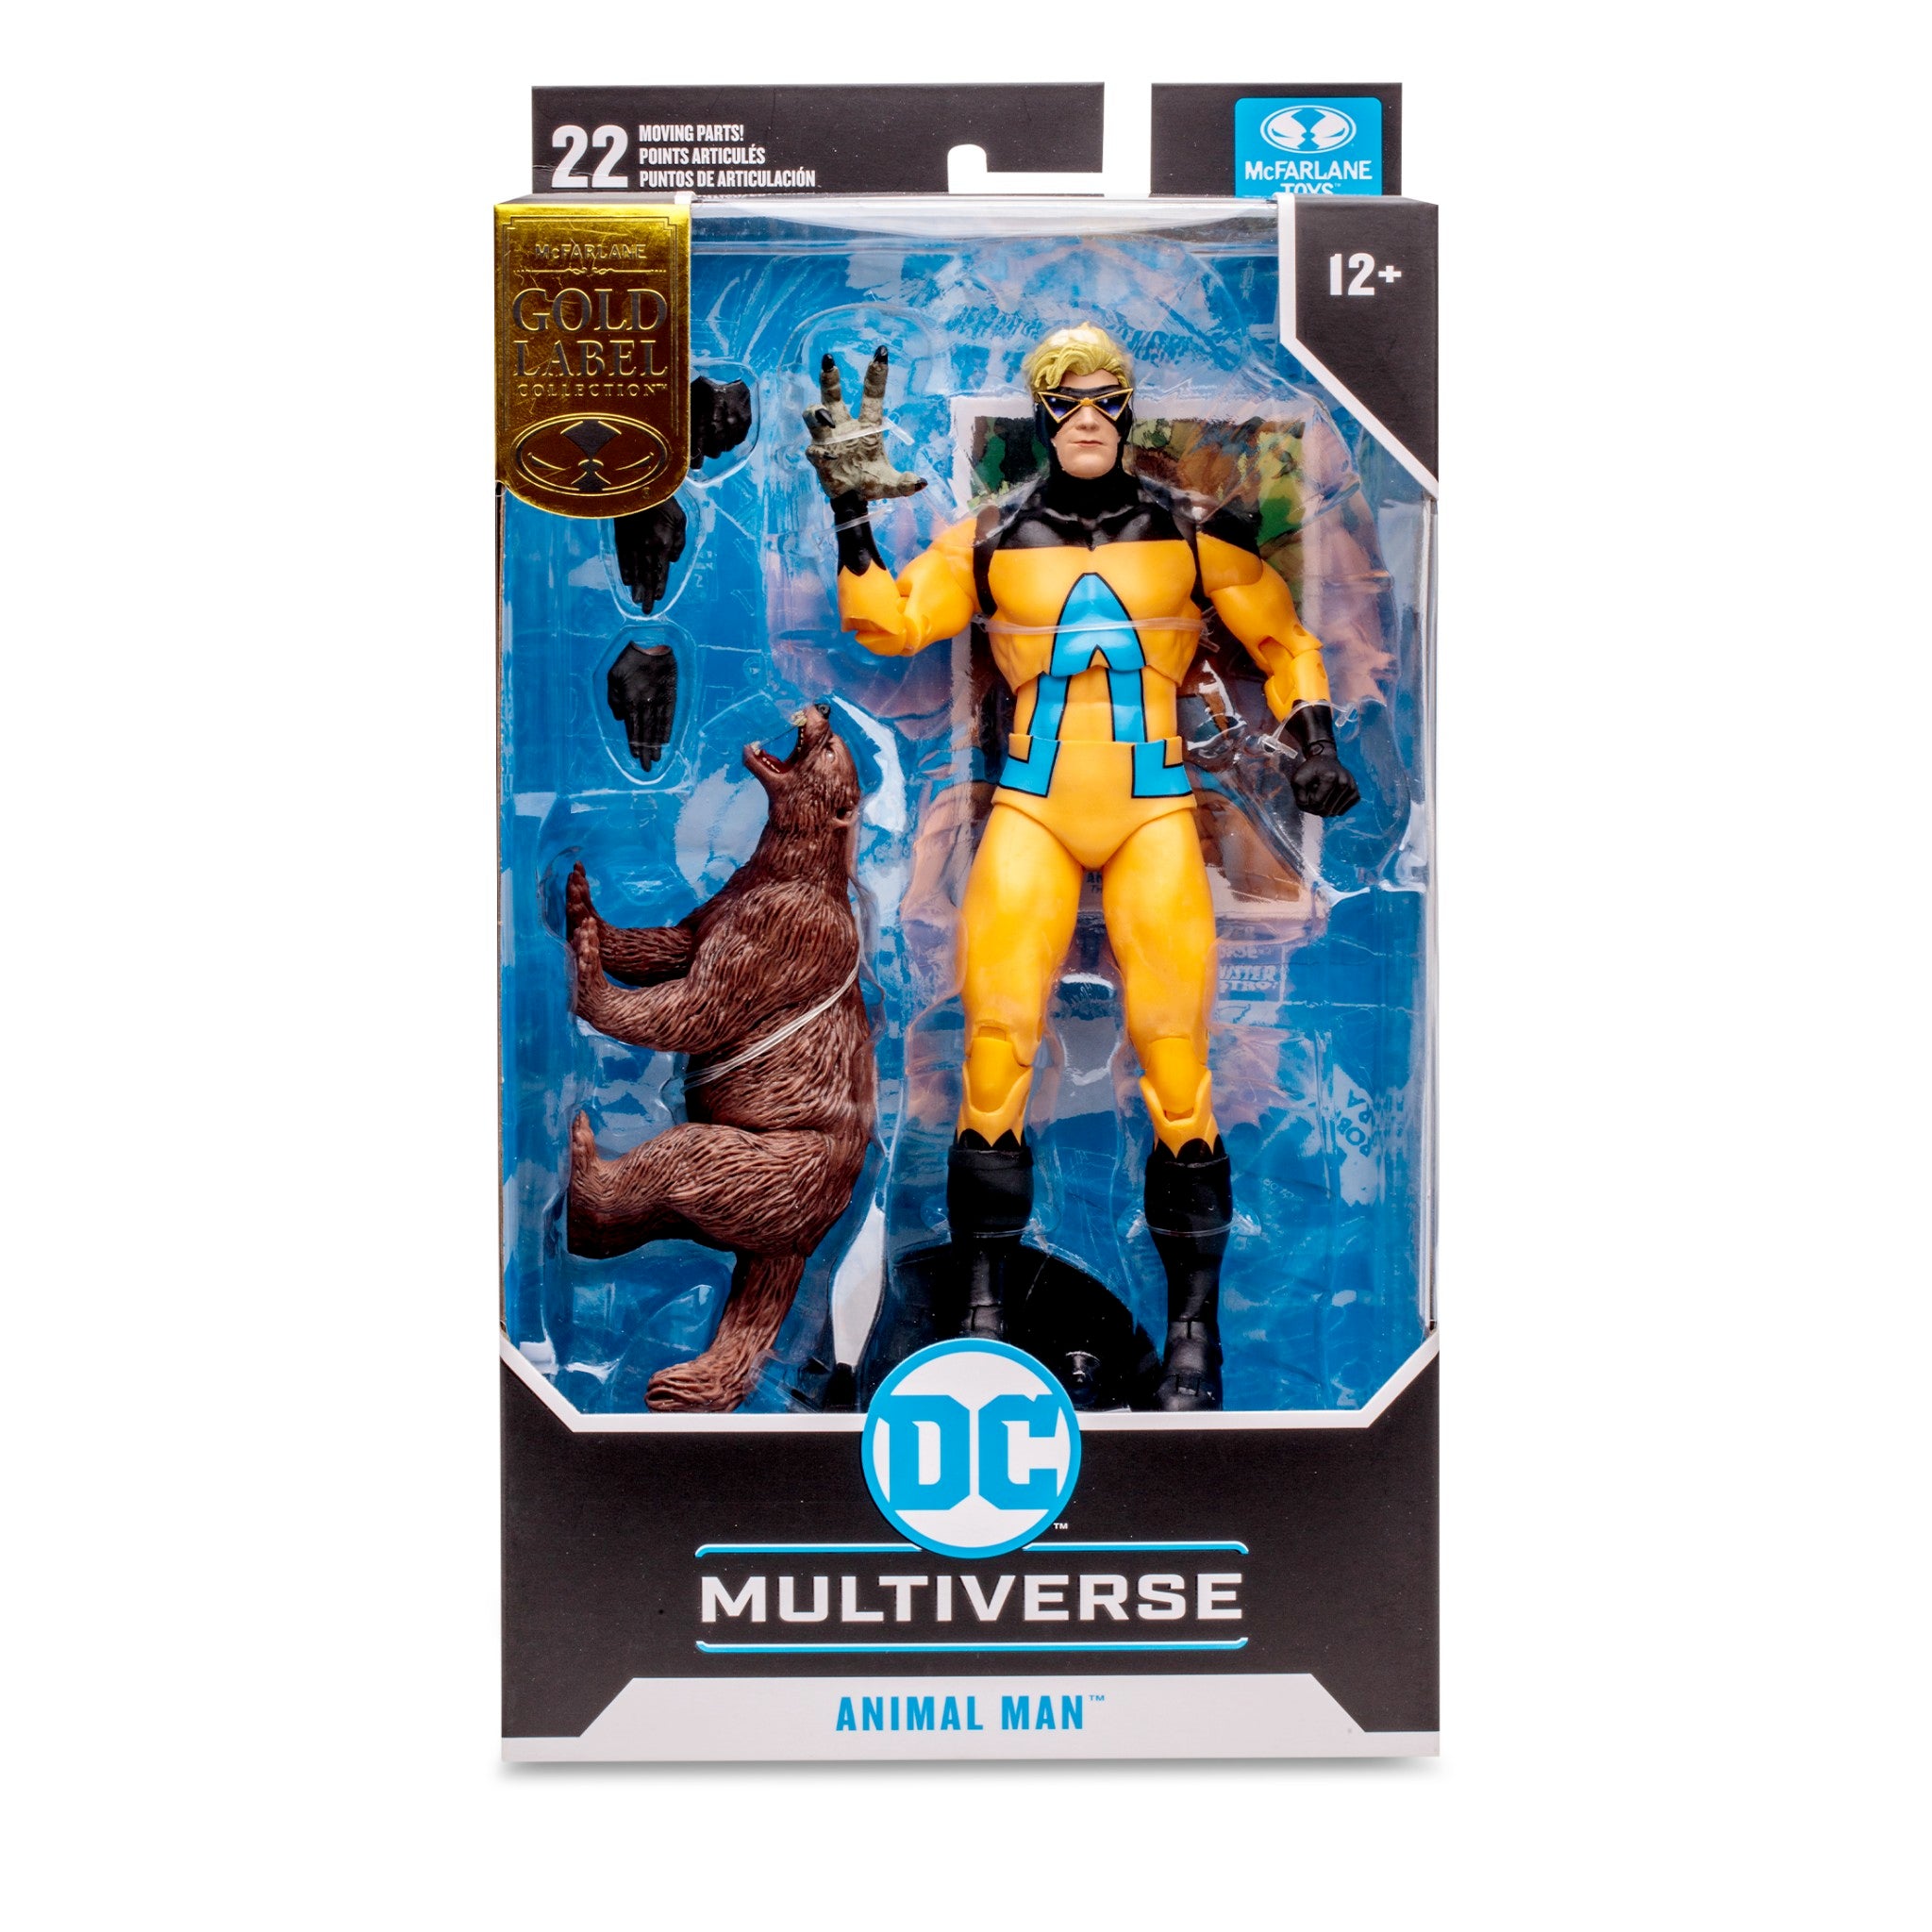 DC Multiverse The Human Zoo Animal Man Gold Label - McFarlane Toys